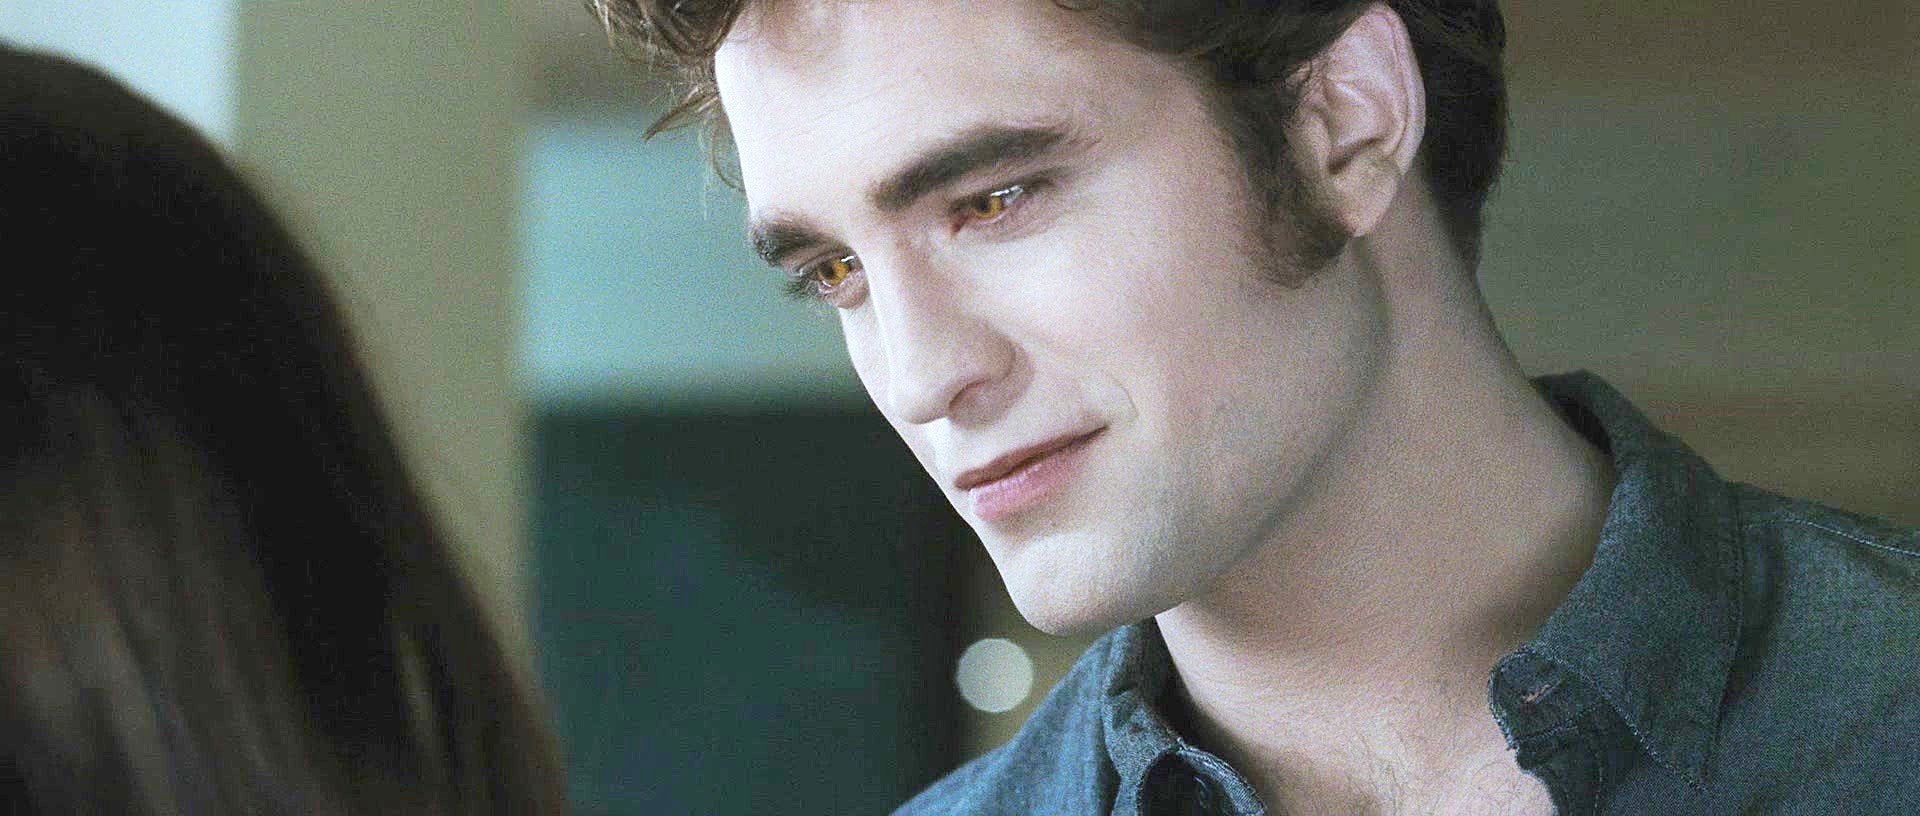 Robbert Pattinson as Edward Cullen in Summit Entertainment's The Twilight Saga's Eclipse (2010)